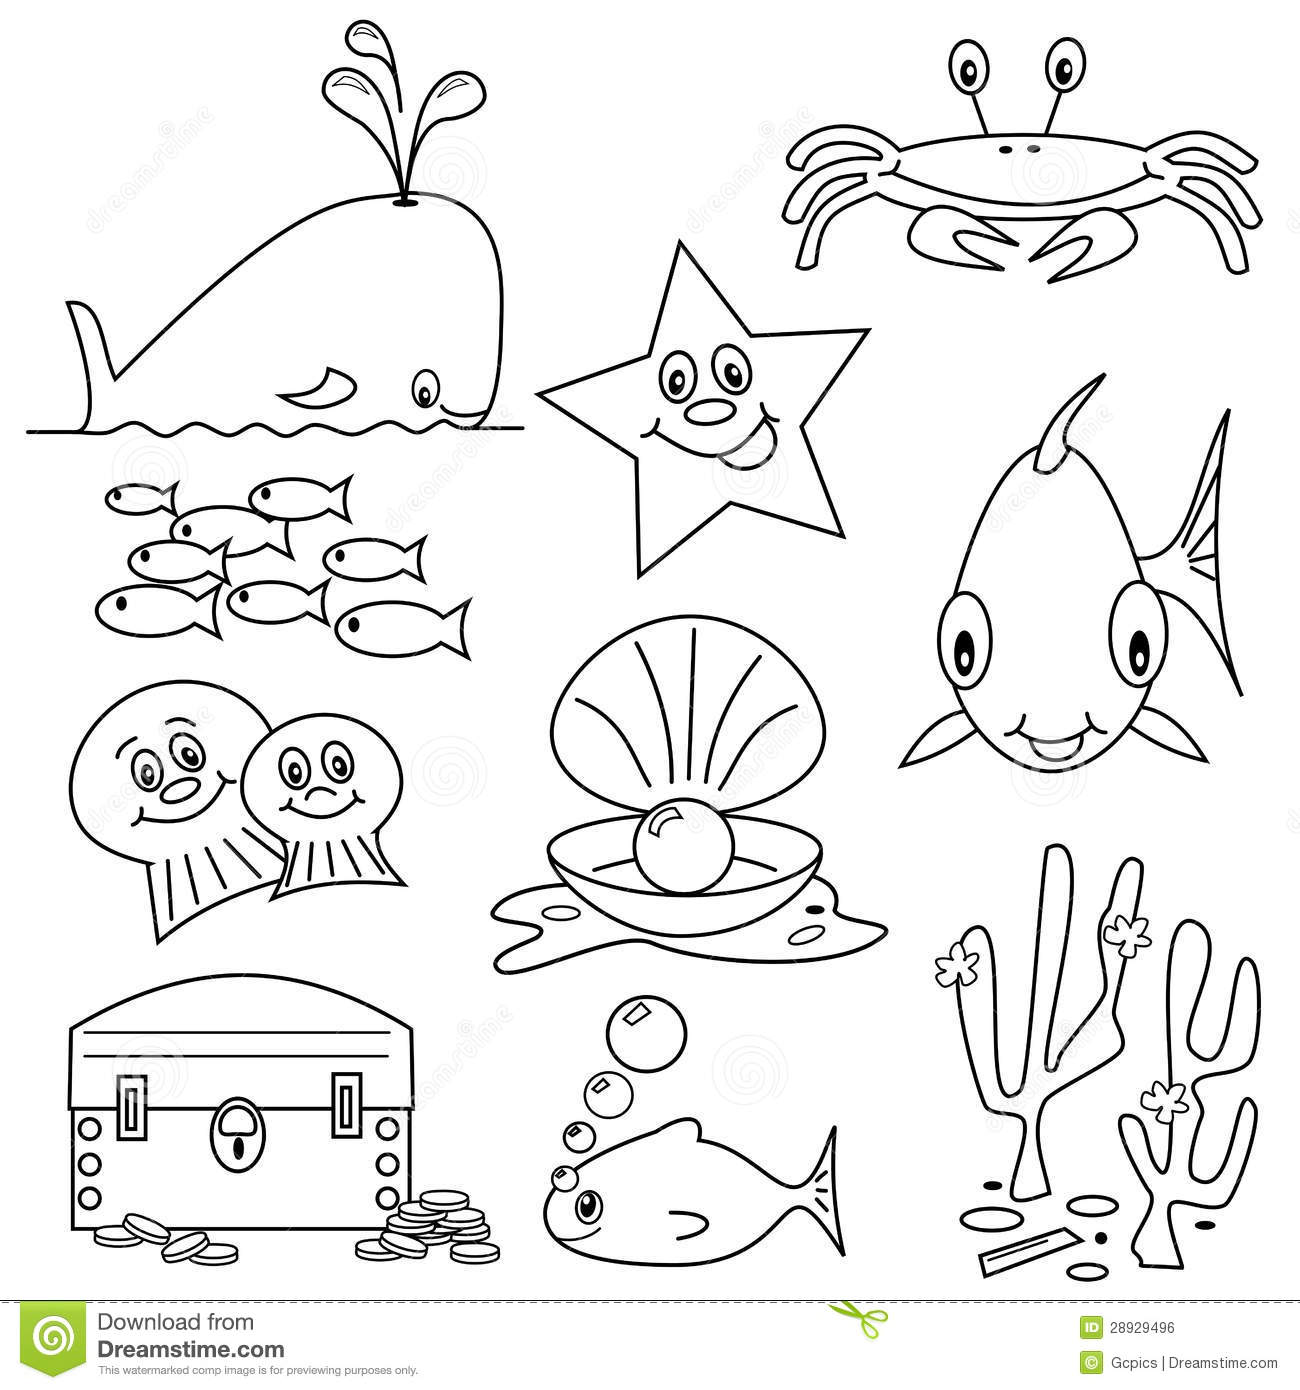 Sea Life Cartoons Royalty Free Stock Image   Image  28929496